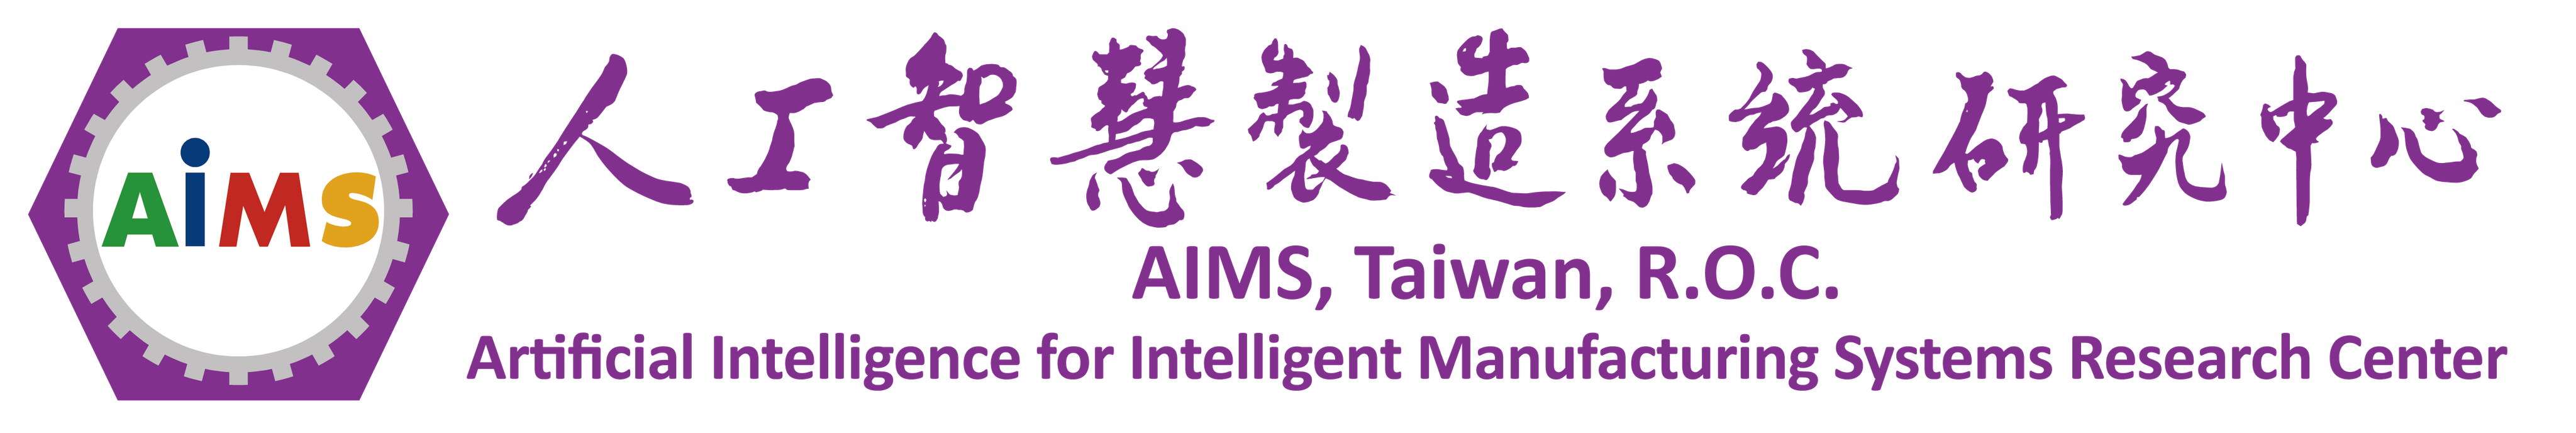 AiMS_logo